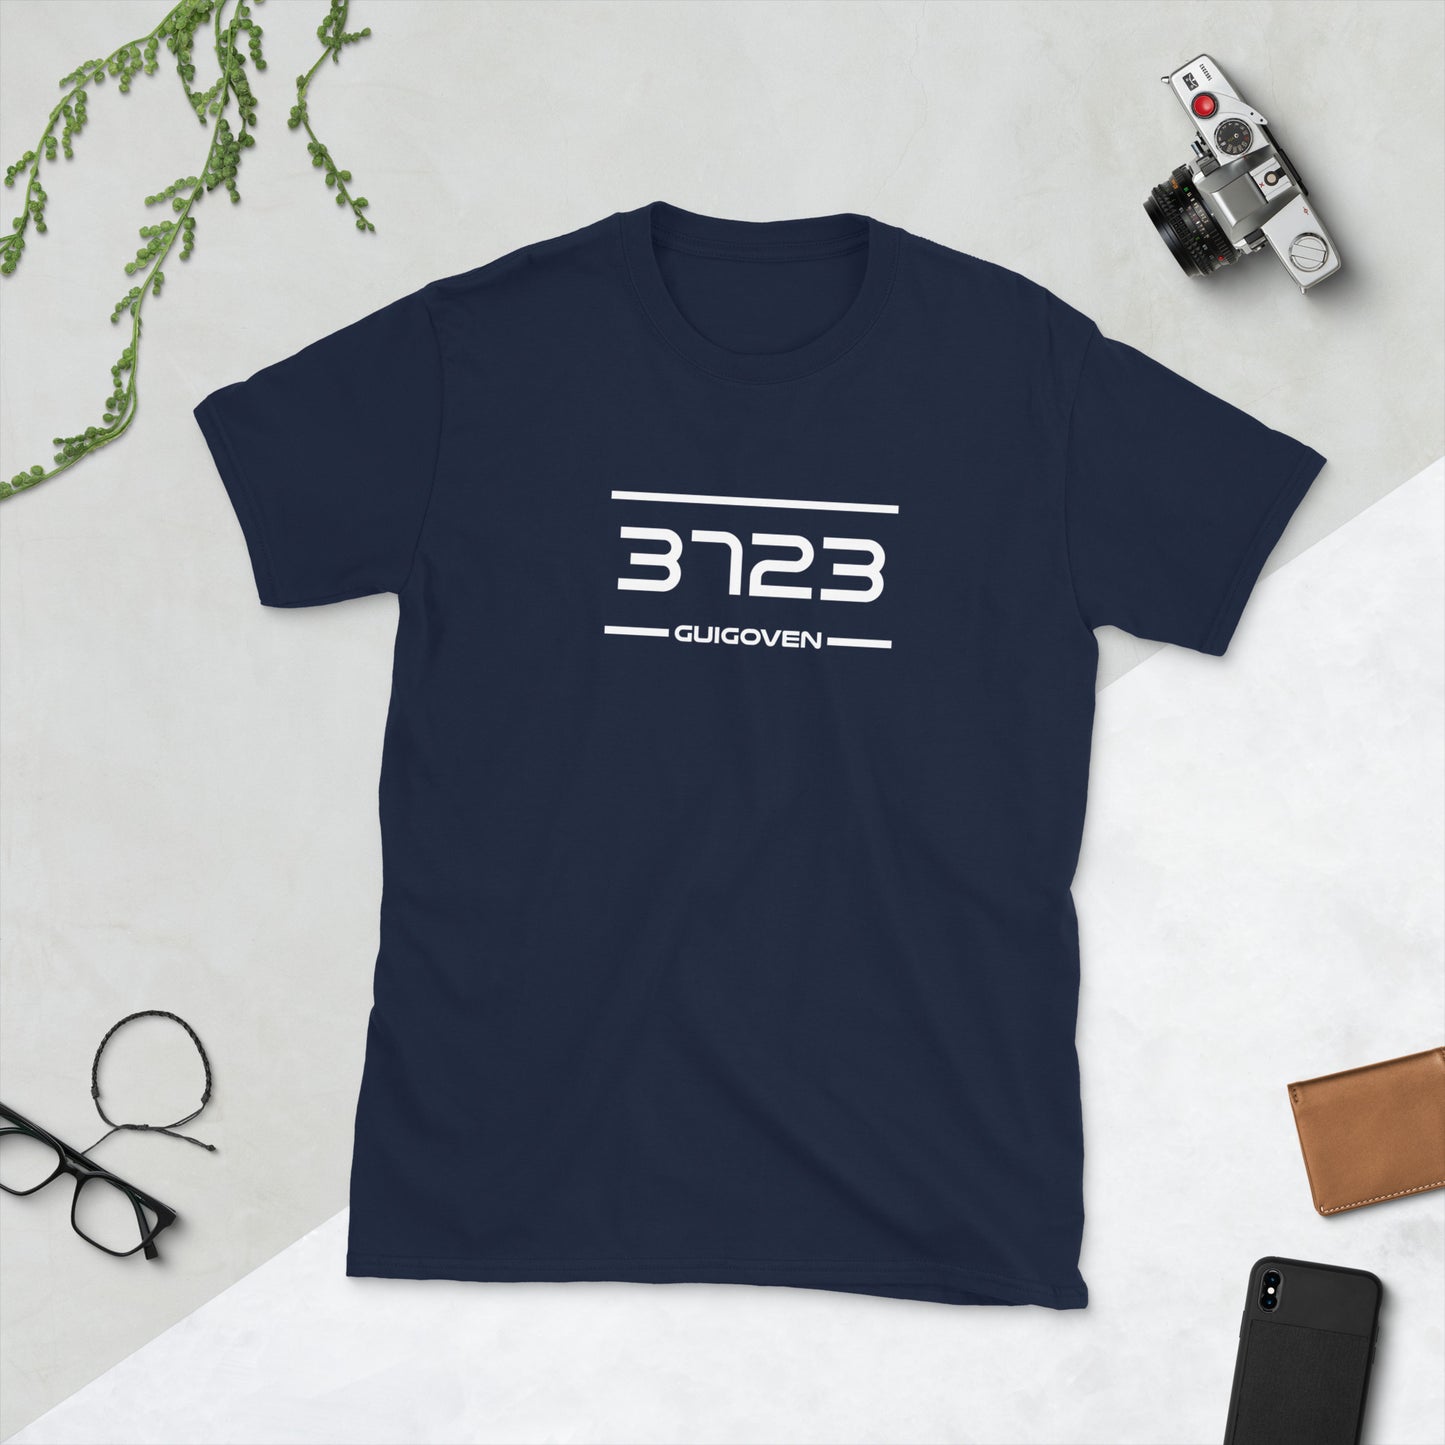 Tshirt - 3723 - Guigoven